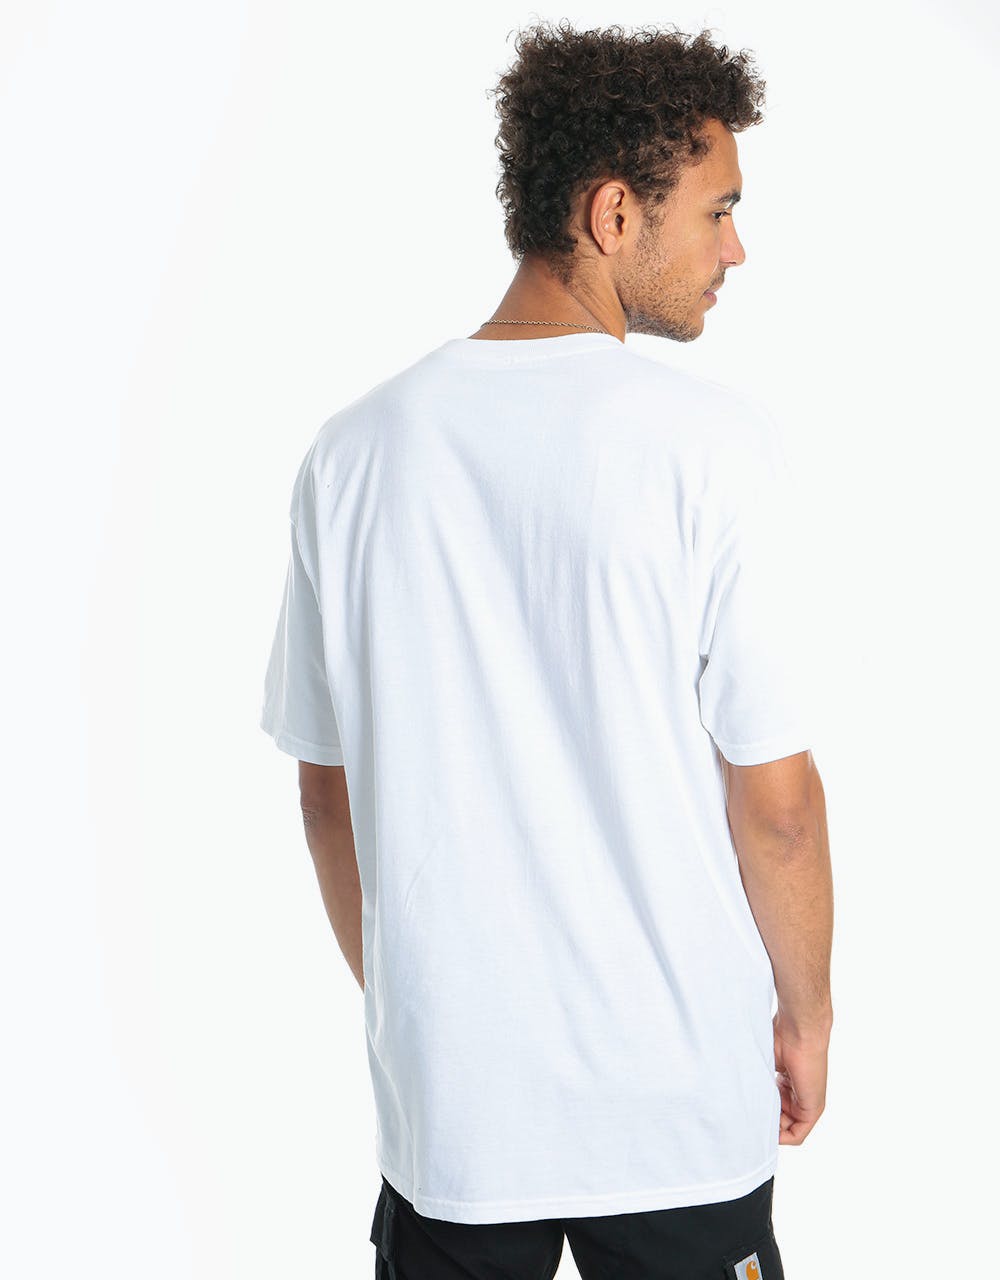 HUF Box Logo T-Shirt - White